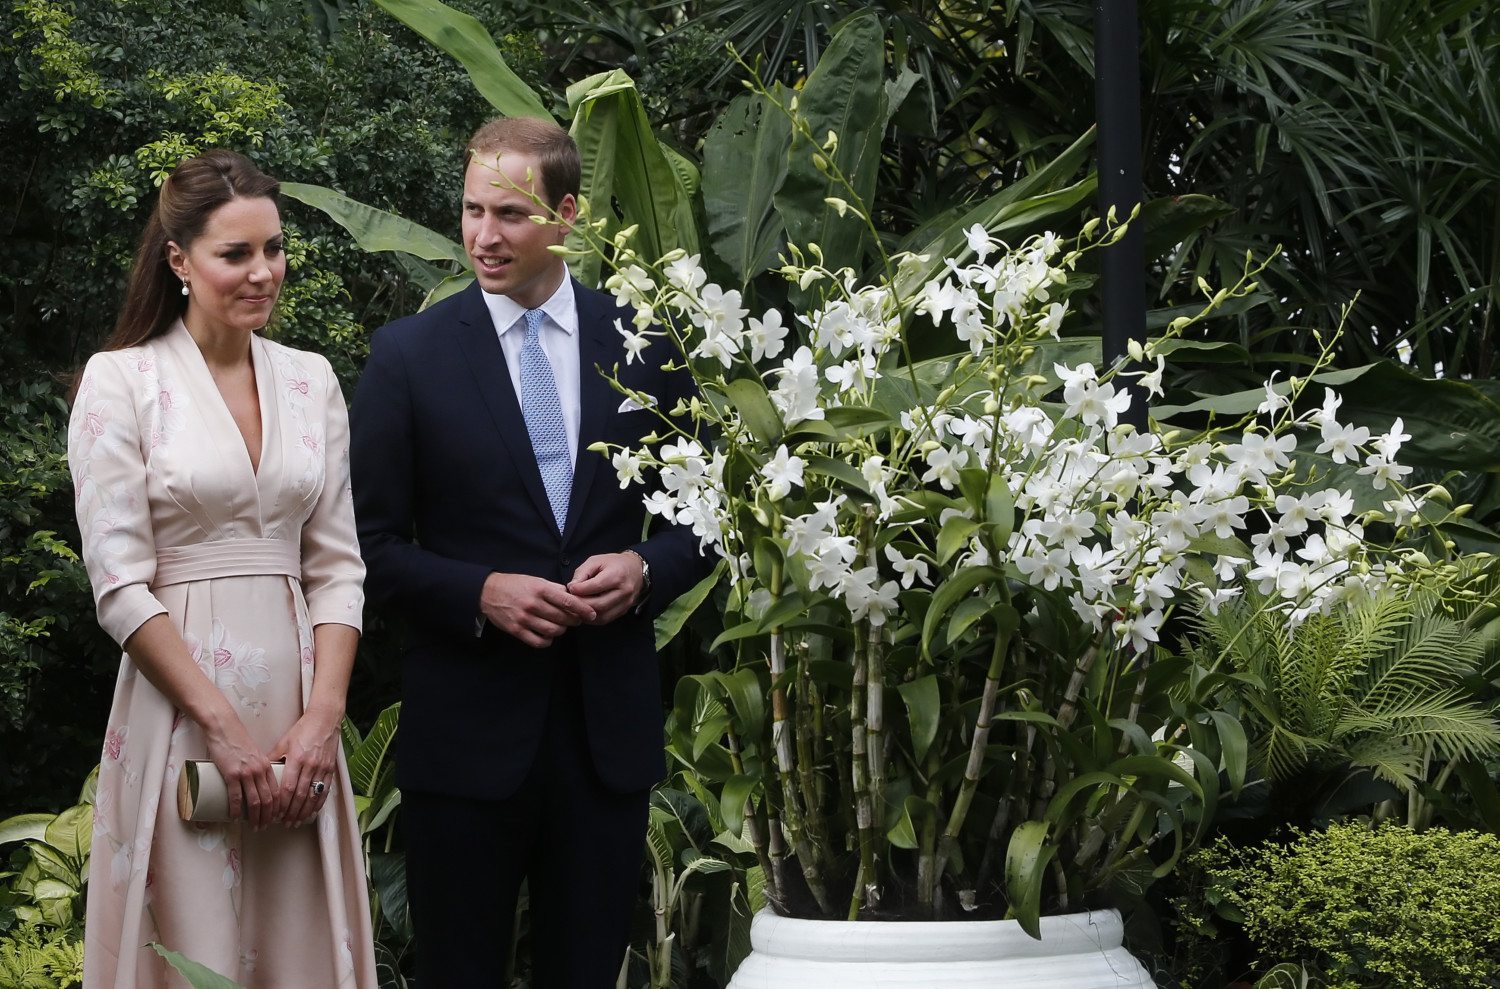 The Duke And Duchess Of Cambridge Diamond Jubilee Tour - Day 1